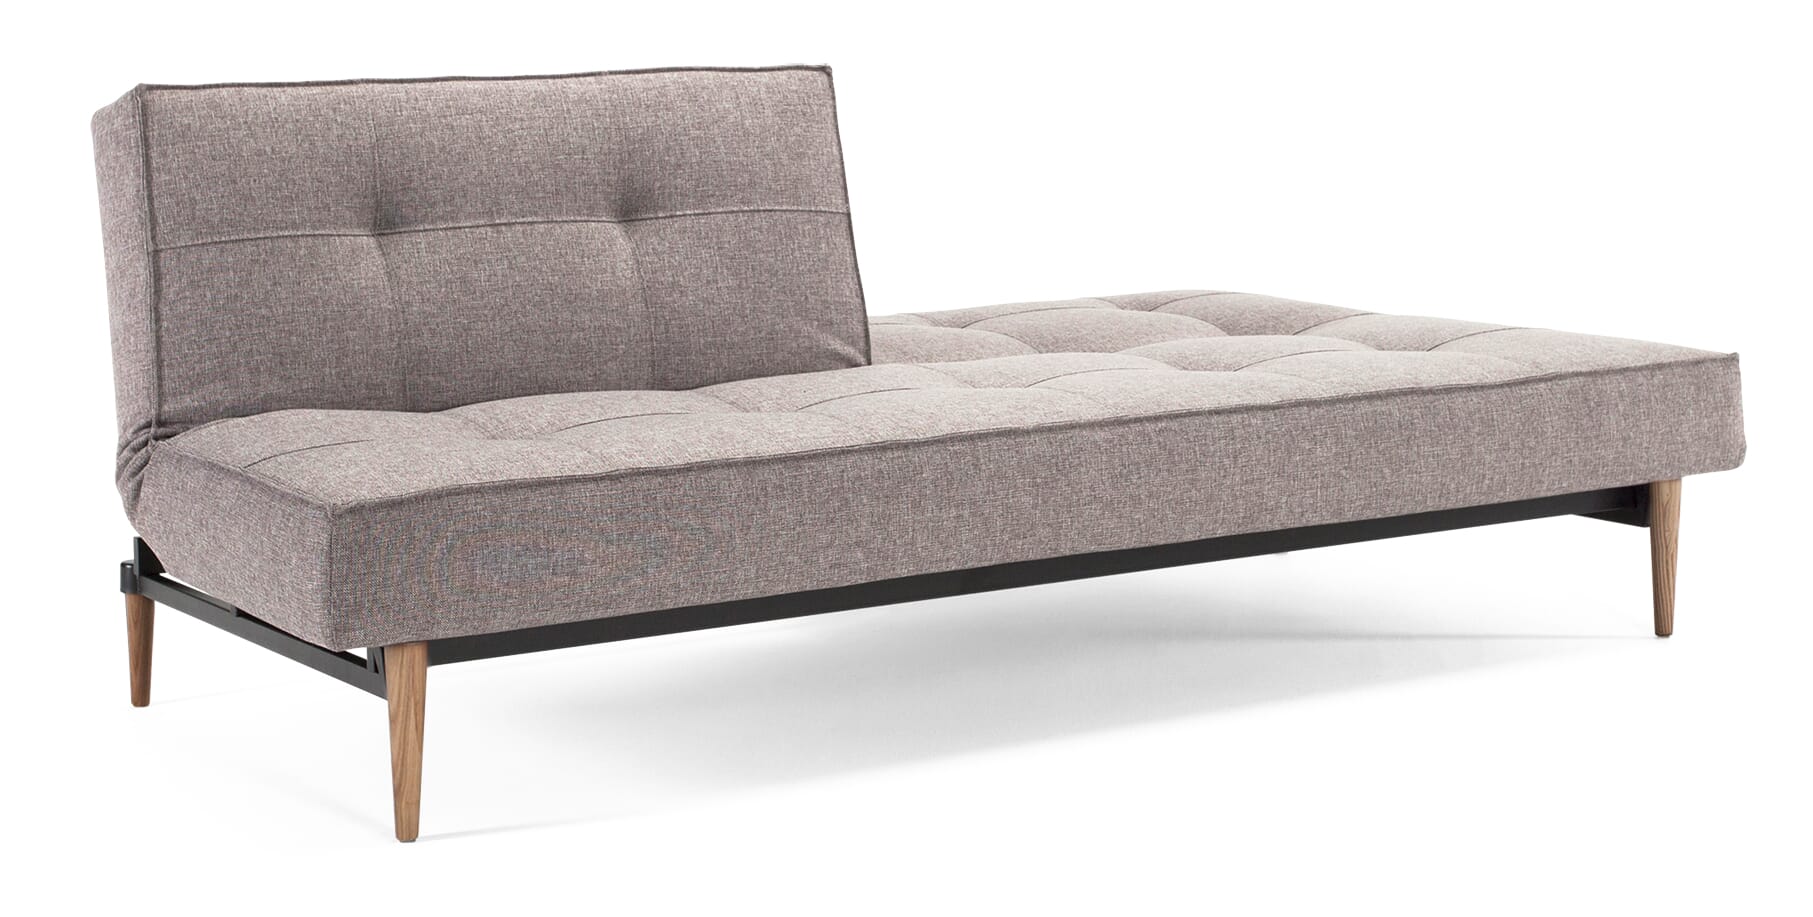 Manufactum Gray sofa | bed, Splitback